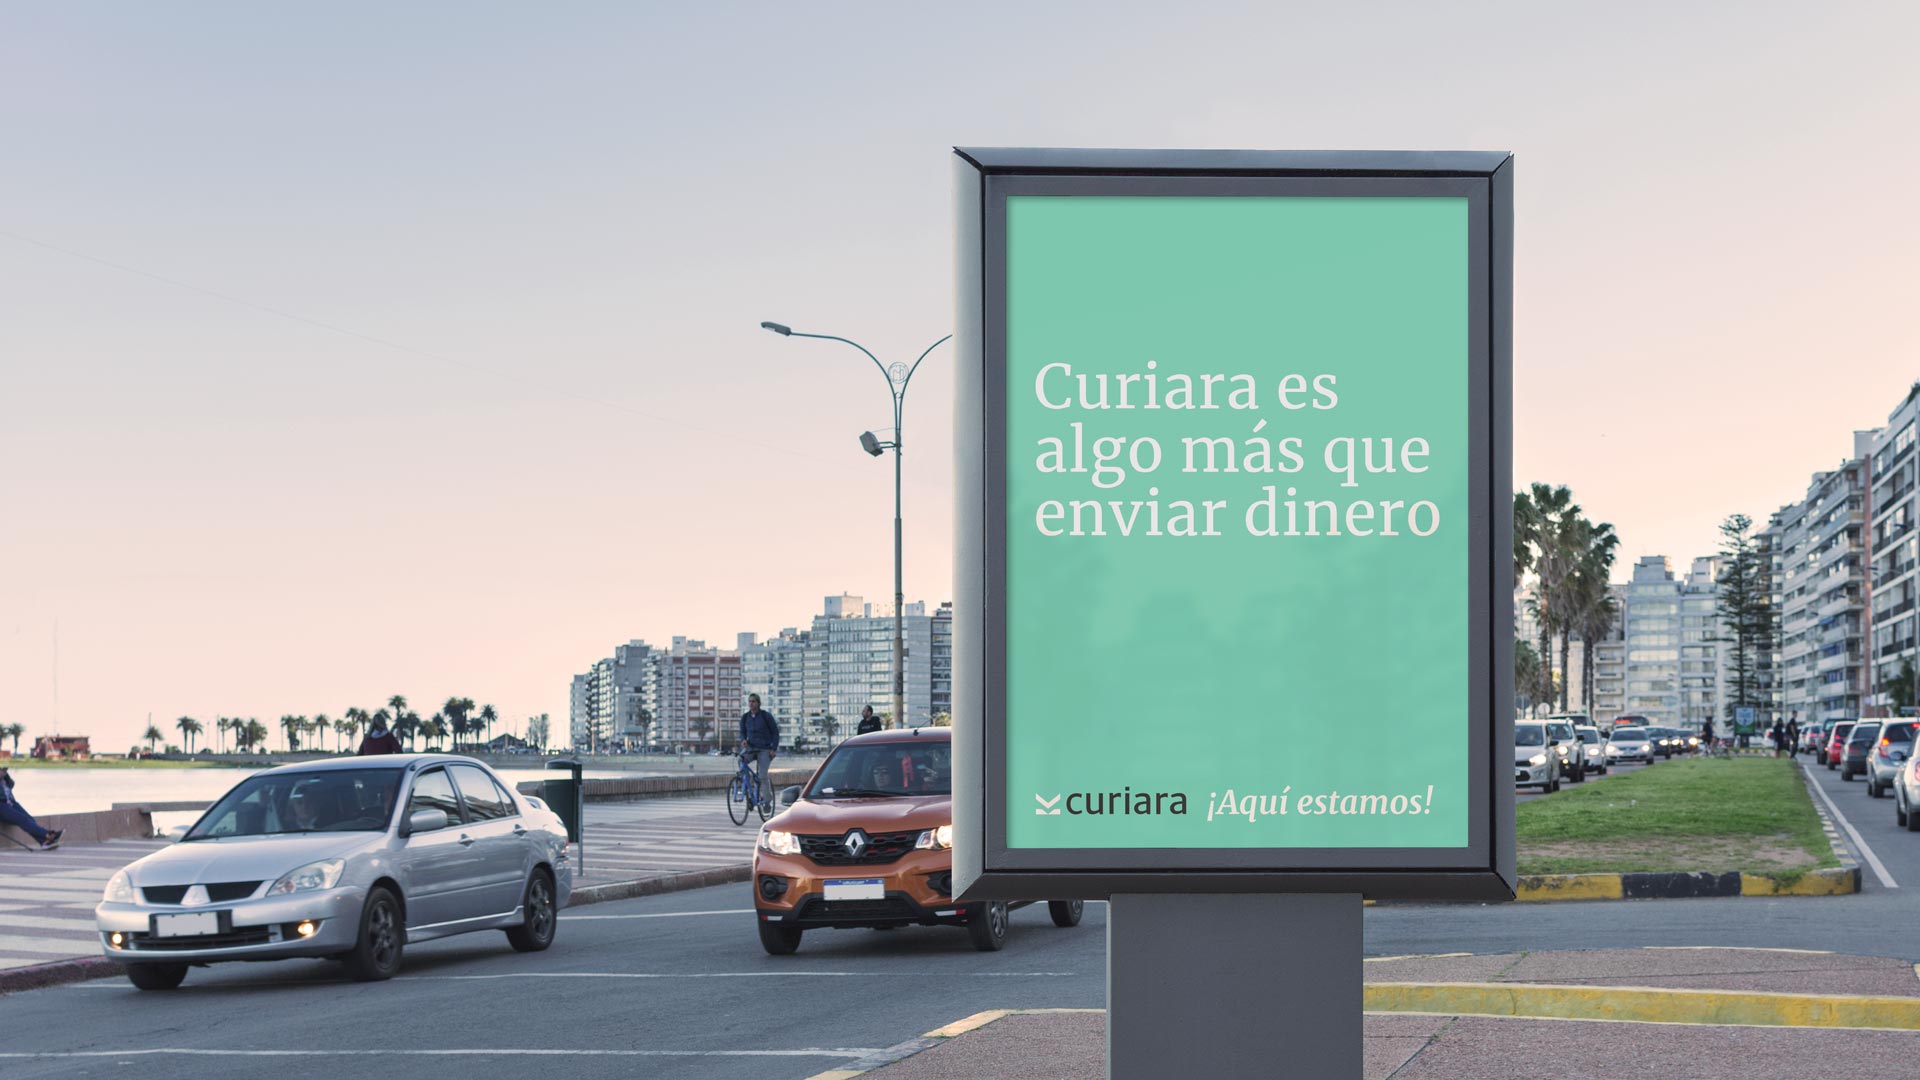 Design of corporate pieces for Curiara, 2019